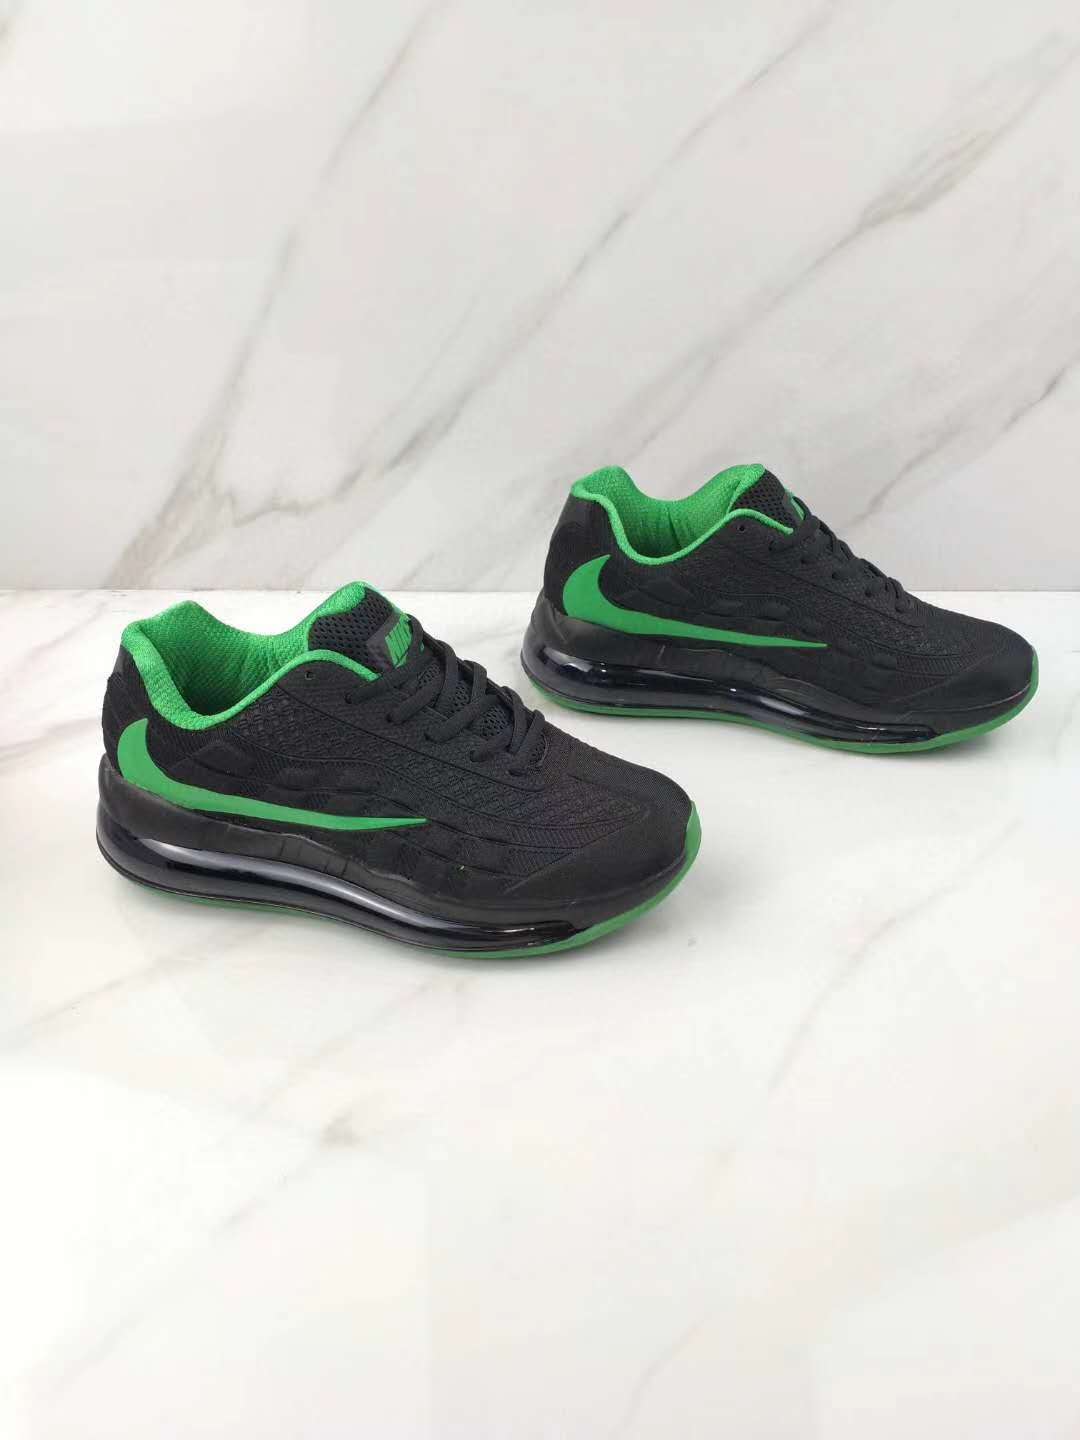 Nike Air Max 95+720 Black Green Shoes